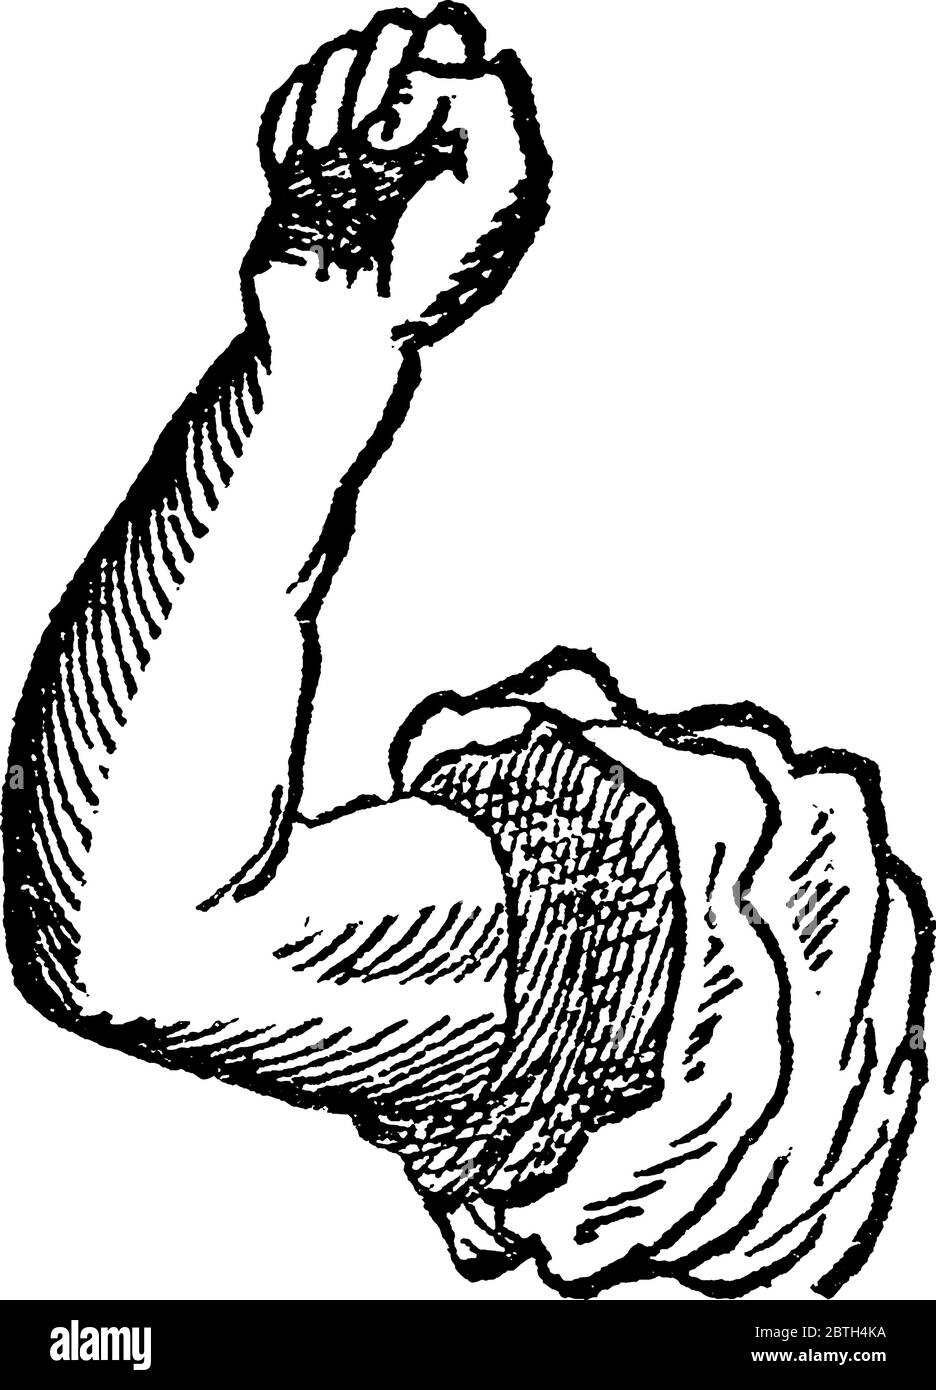 human hand arm open raised Stock Vector Image & Art - Alamy